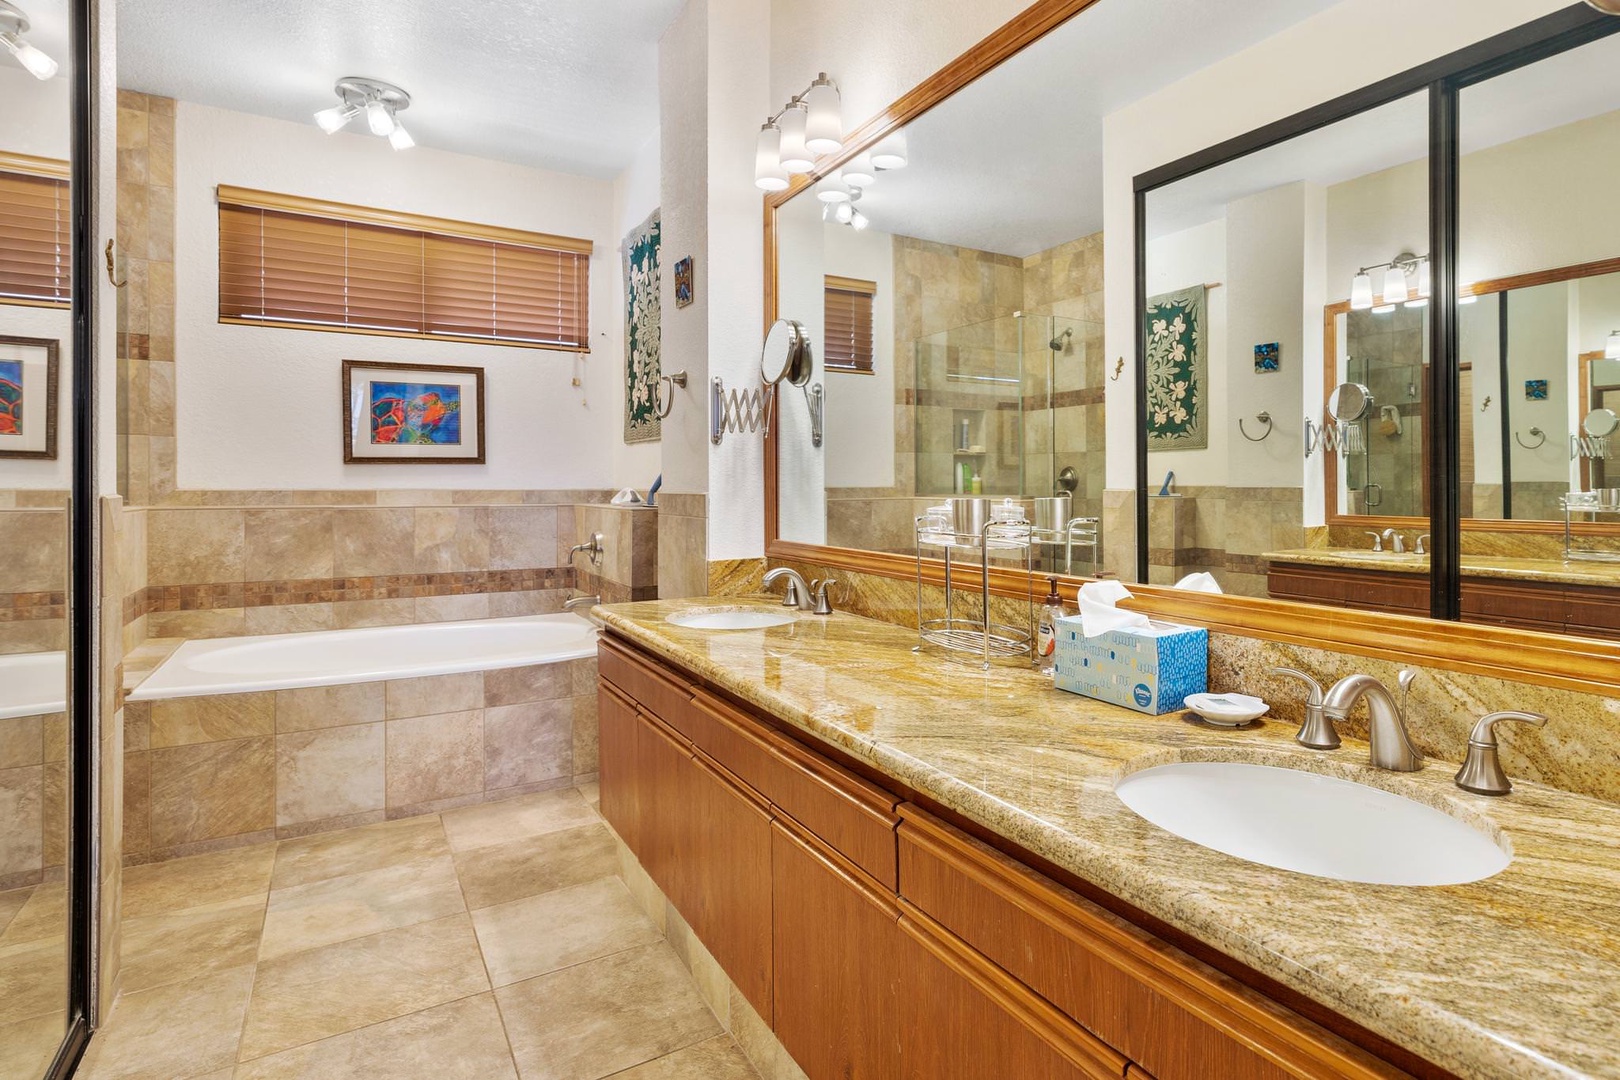 En suite bathroom with dual sinks, soaking tub, and standing shower